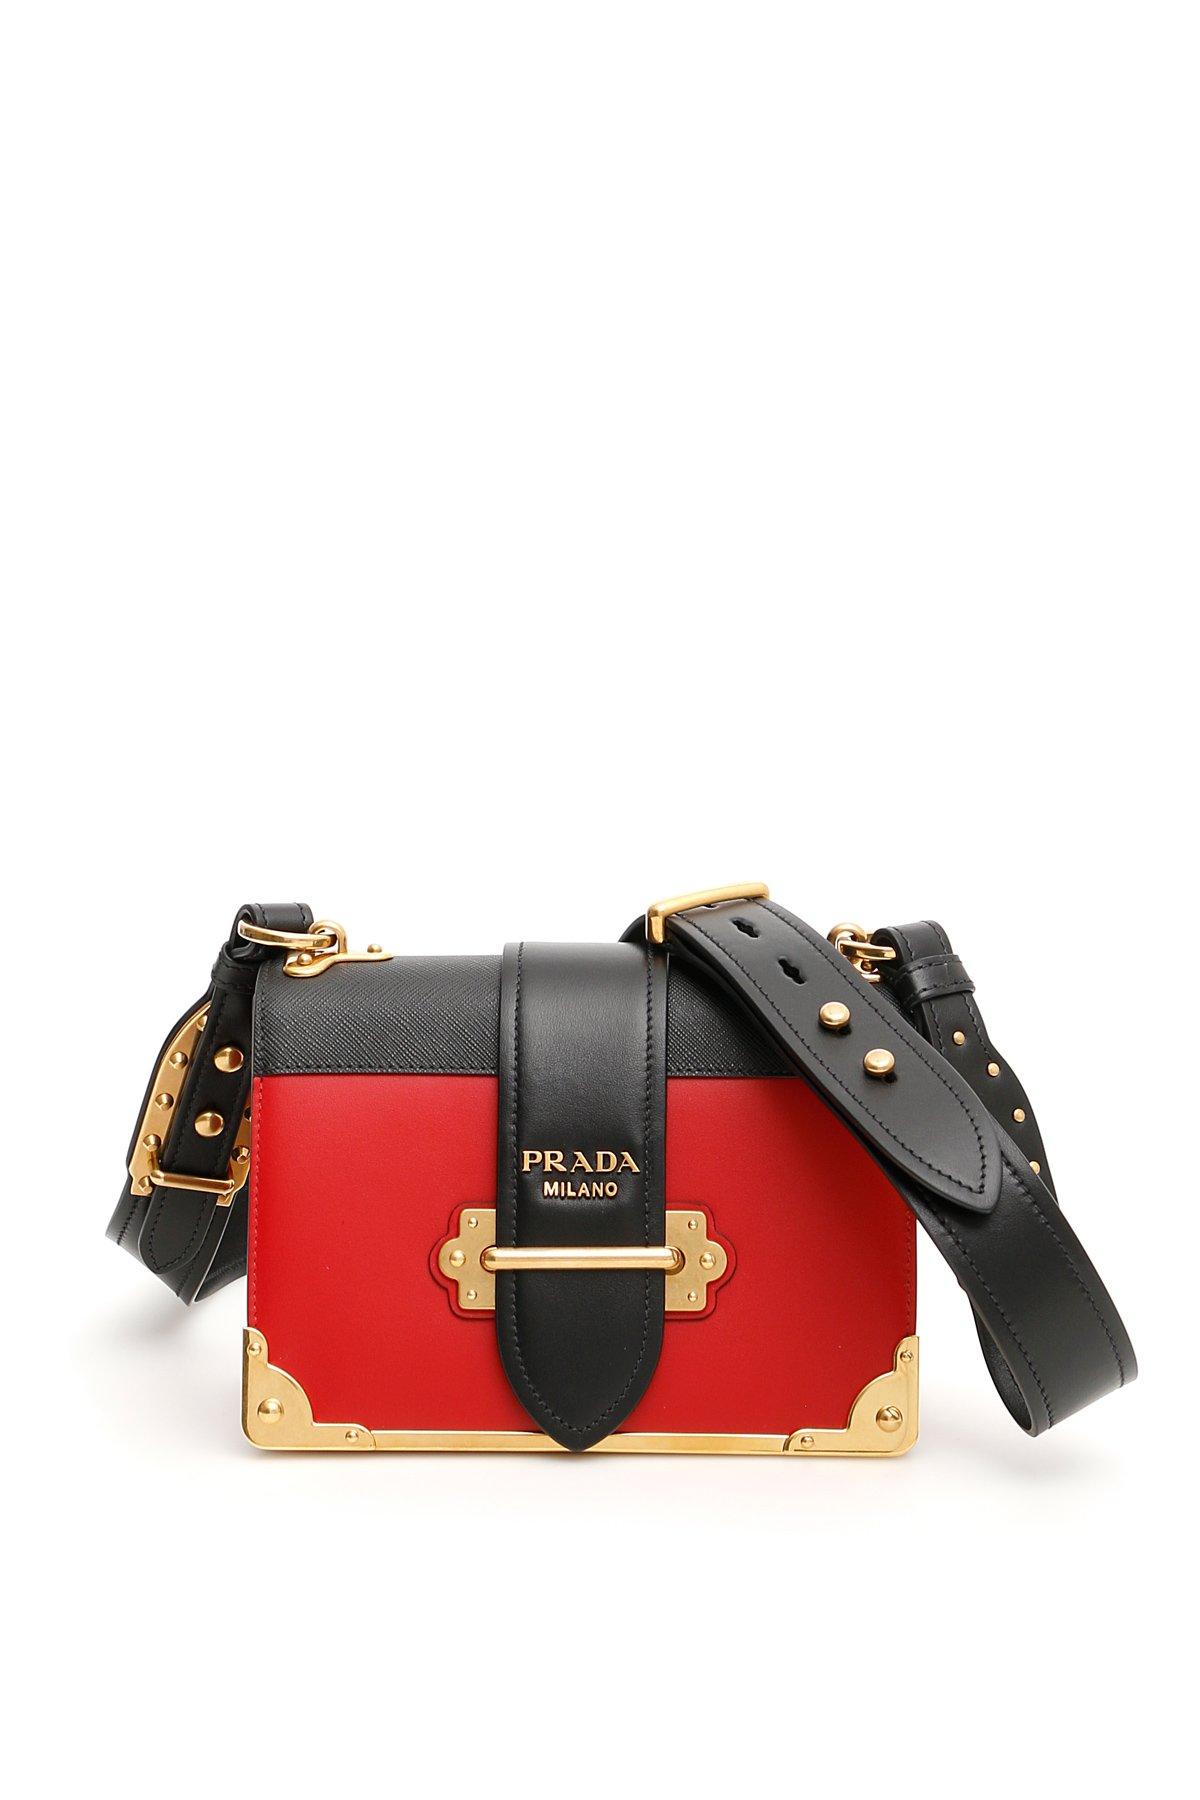 Prada Cahier Leather Shoulder Bag in Red | Lyst